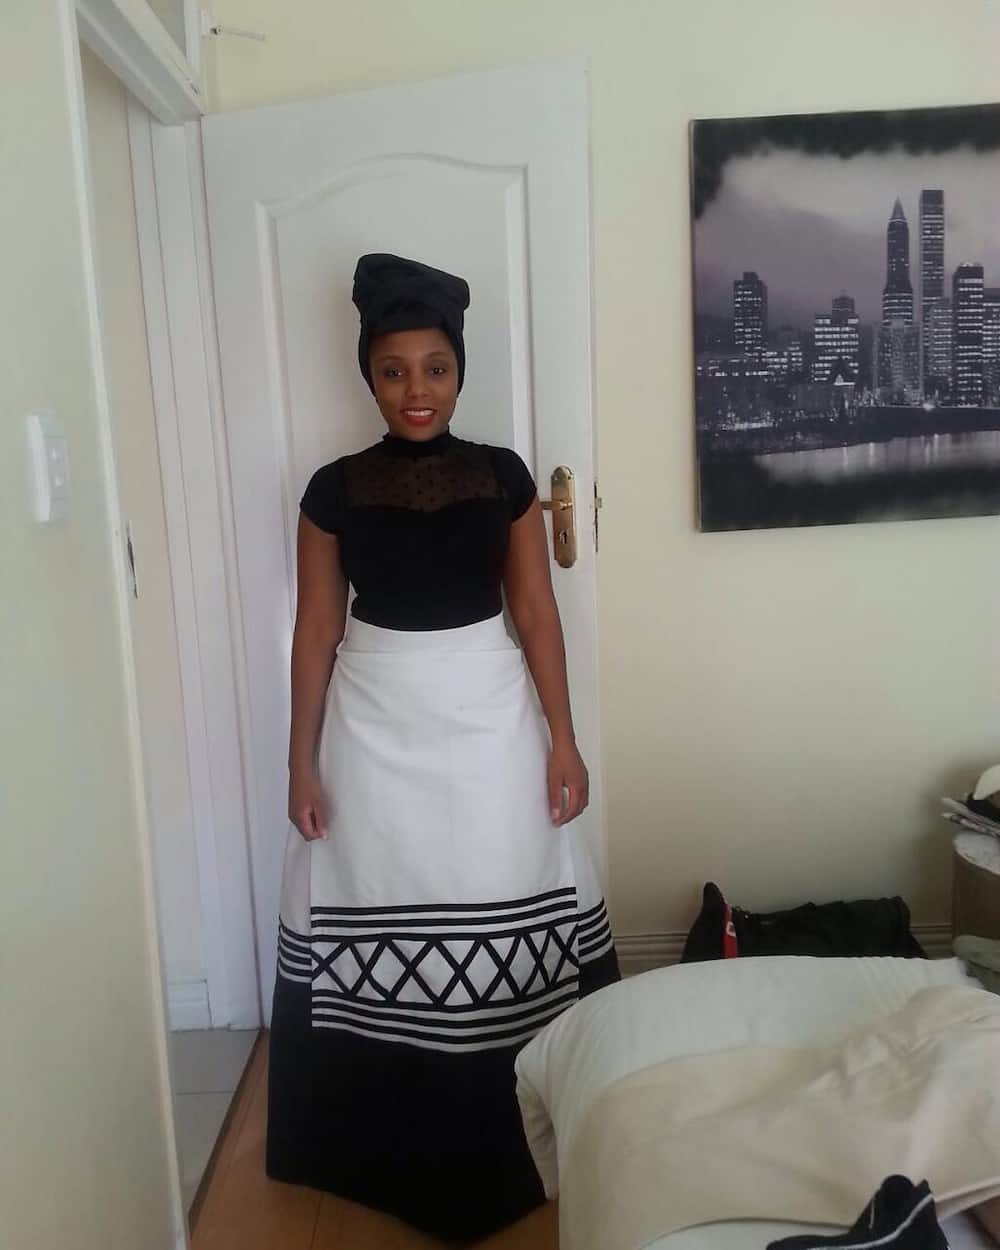 Xhosa traditional attire